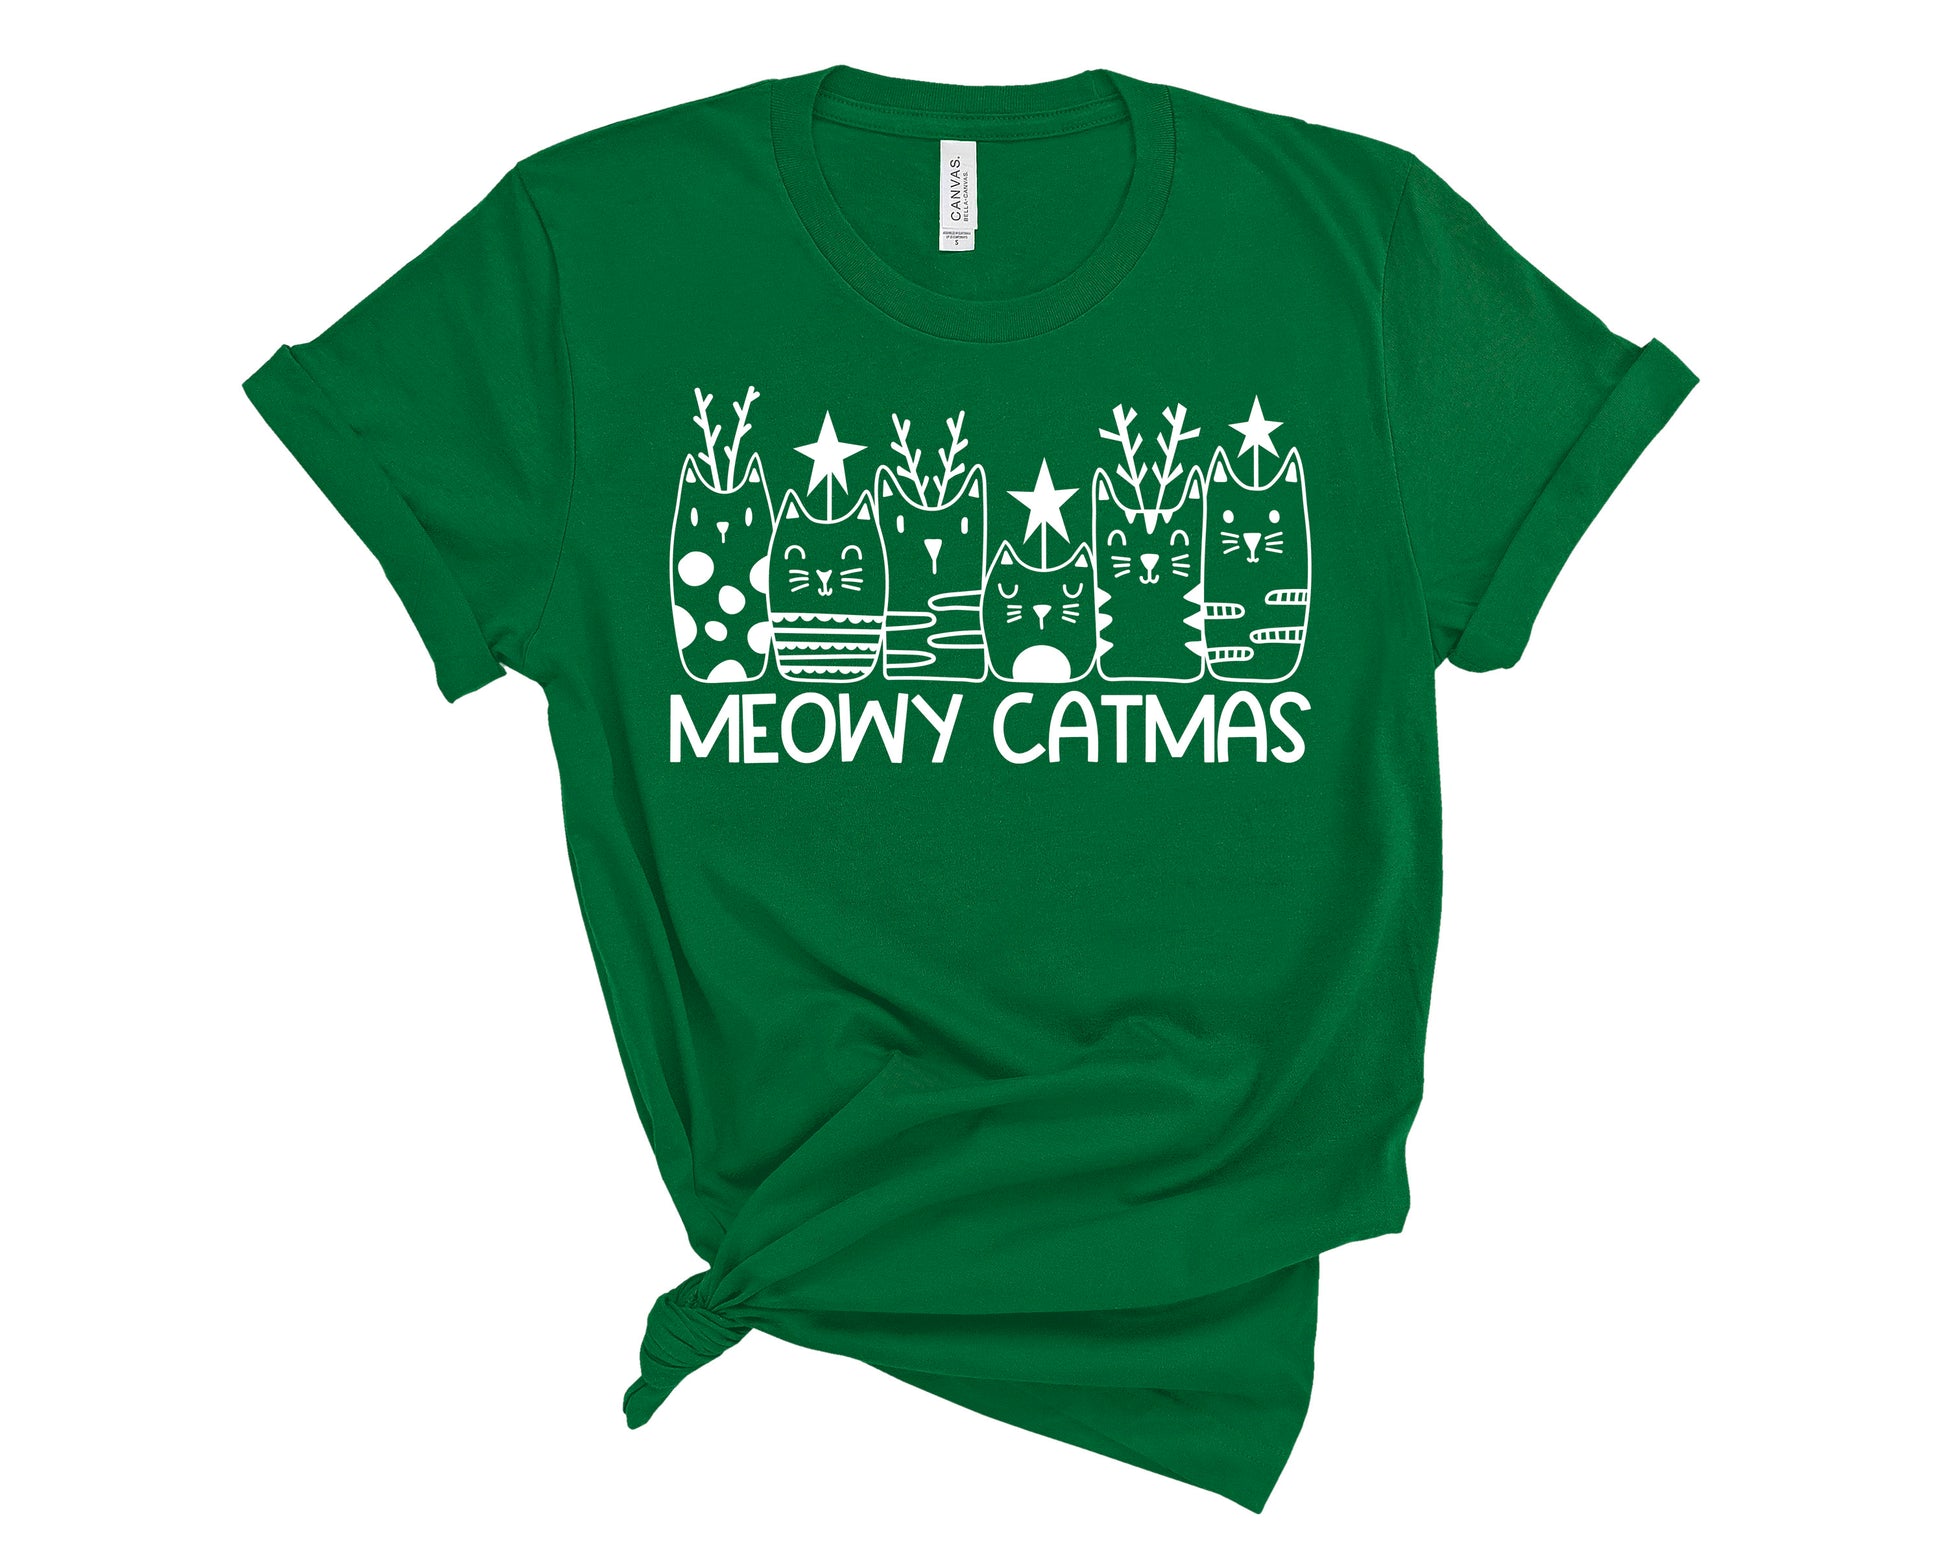 merry catmas shirt